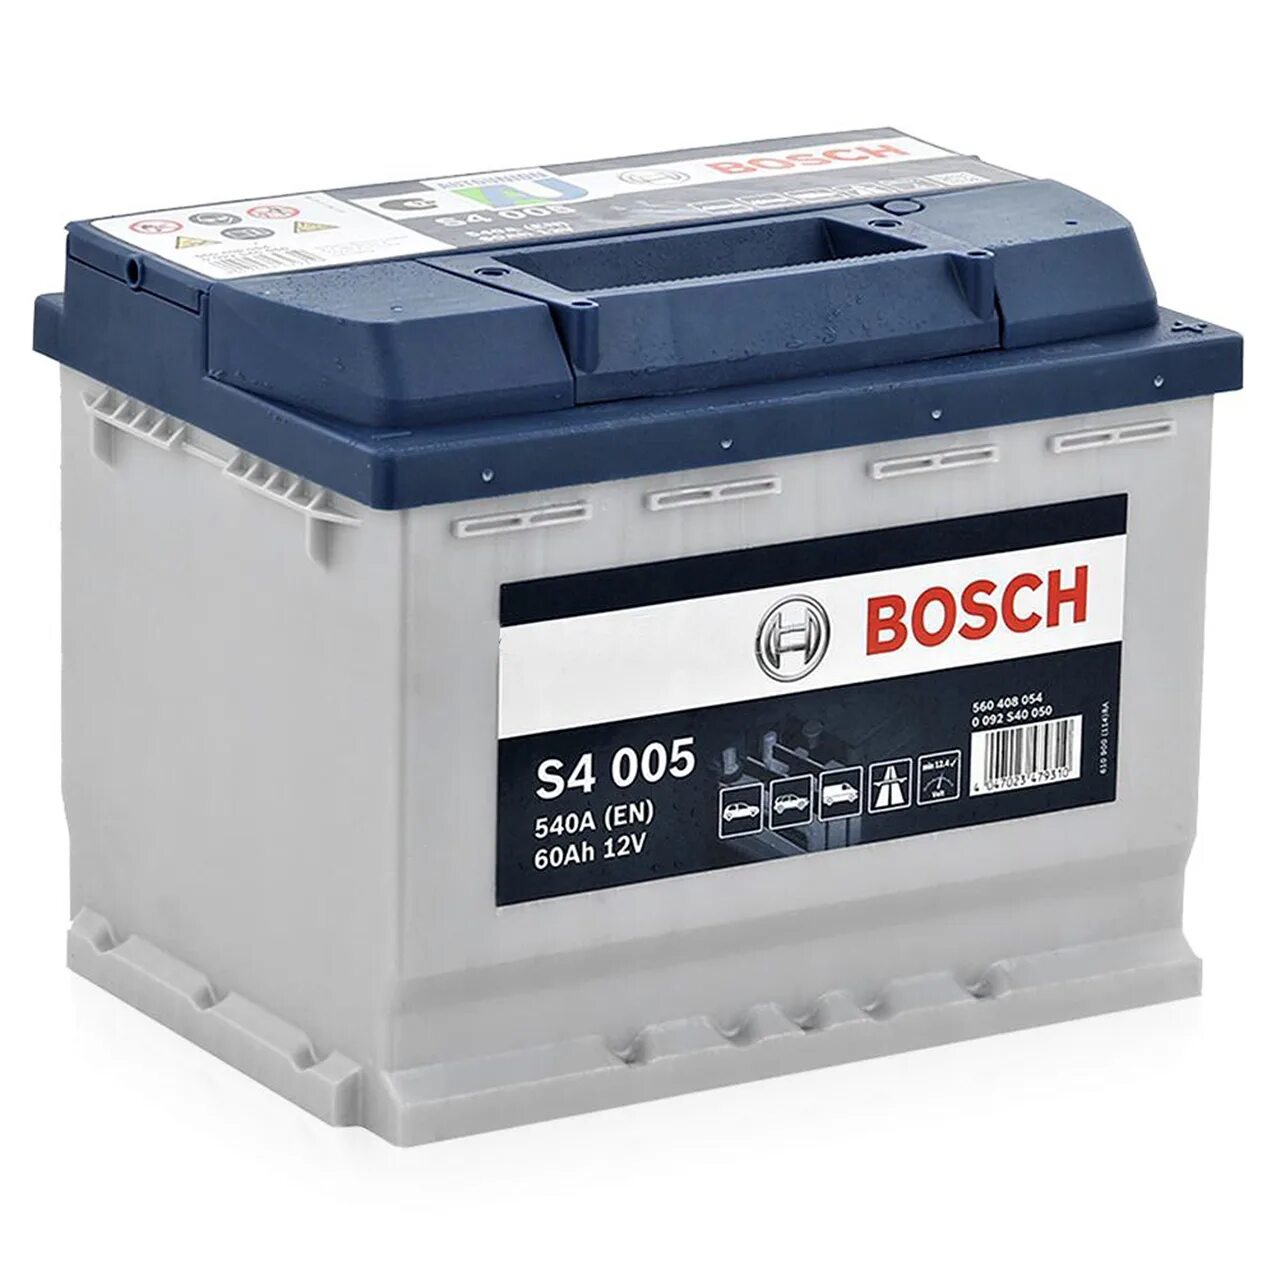 Аккумулятор Bosch 60ah. Аккумулятор Bosch автомобильный 60 Ач. 0092s40060 АКБ s4 006 Силвер 12v 60ah 540a. Bosch 60 АКБ s5004. Аккумулятор автомобильный 60ah